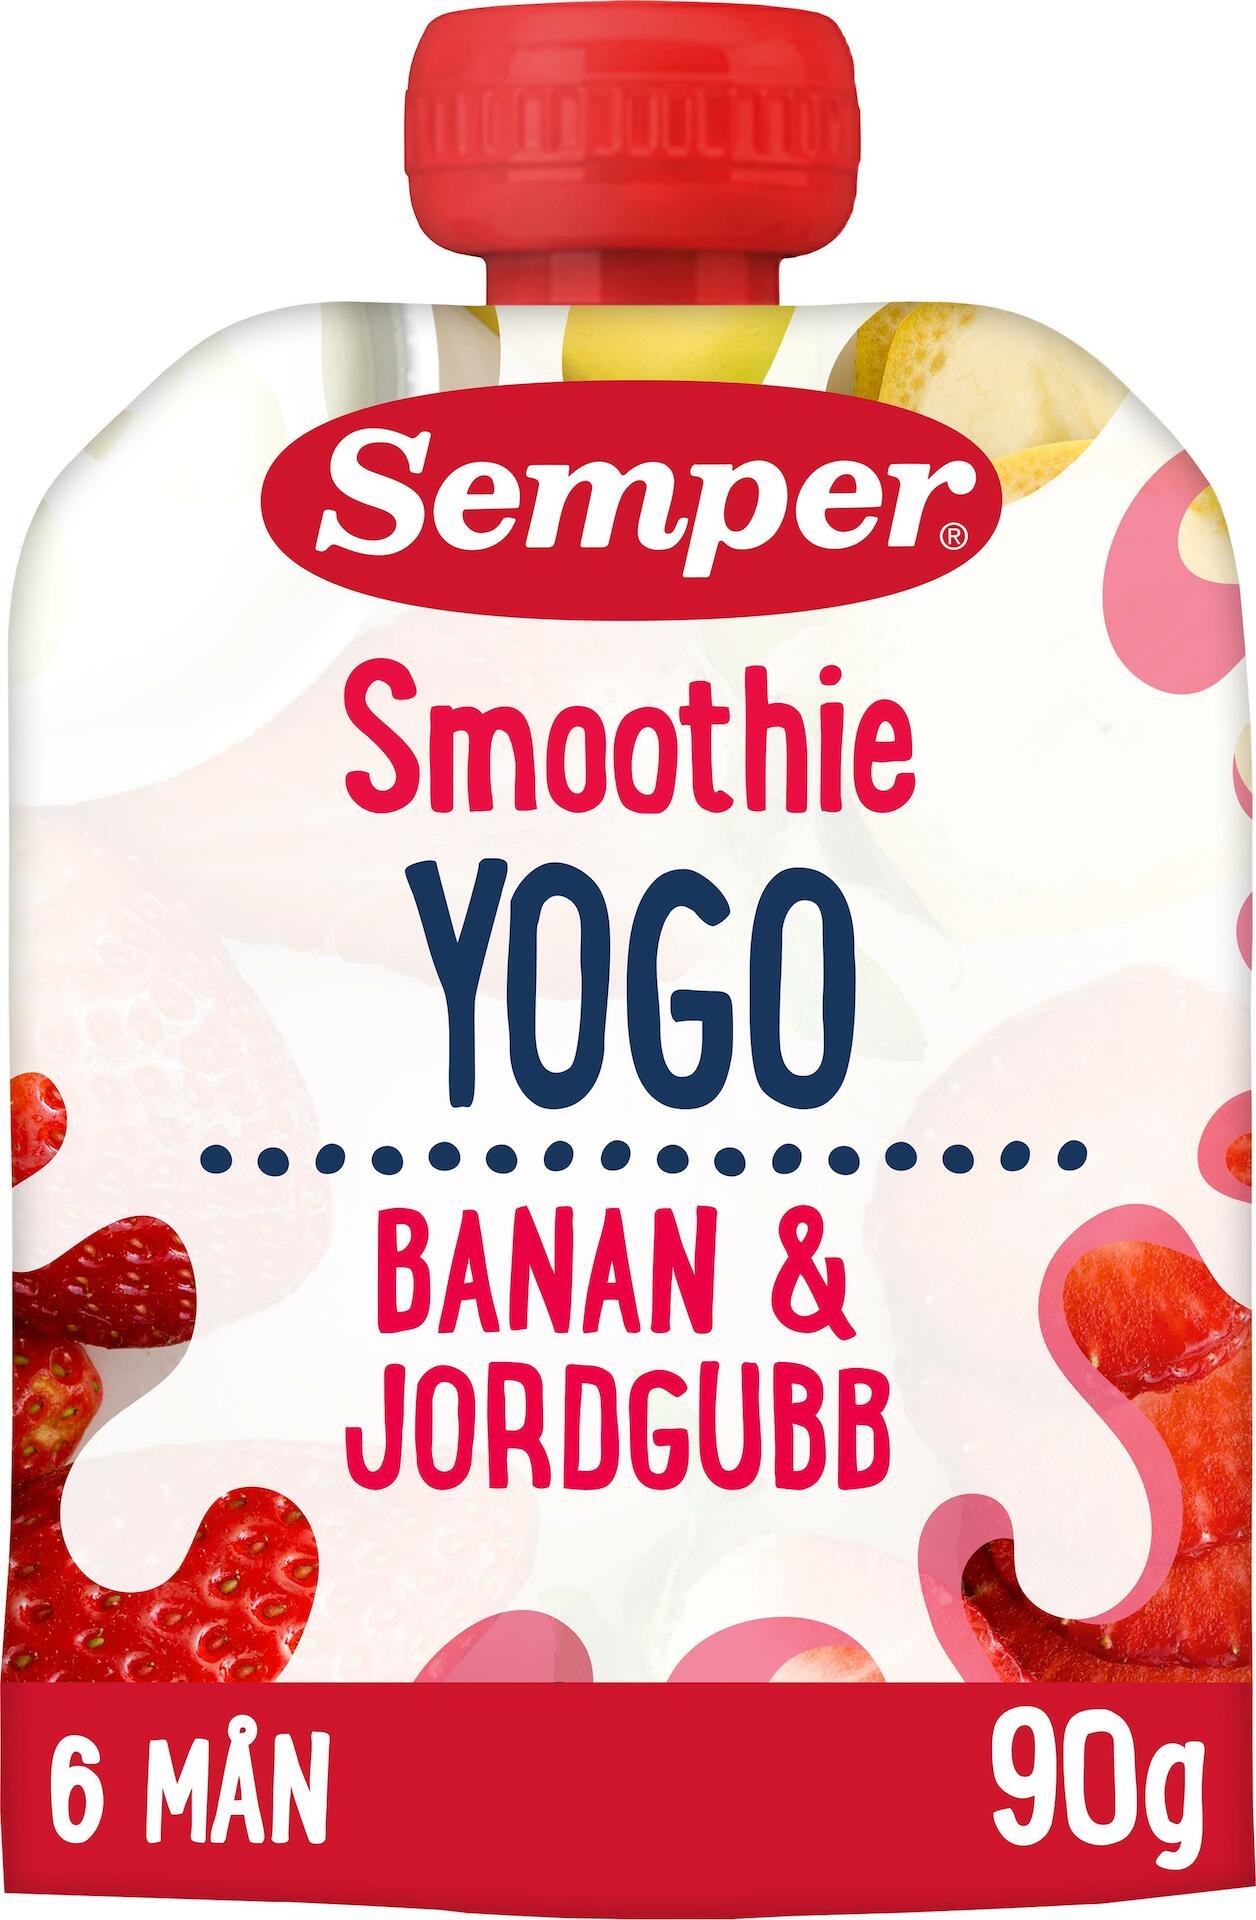 Semper Smoothie Yogo Banan & Jordbubb 90g